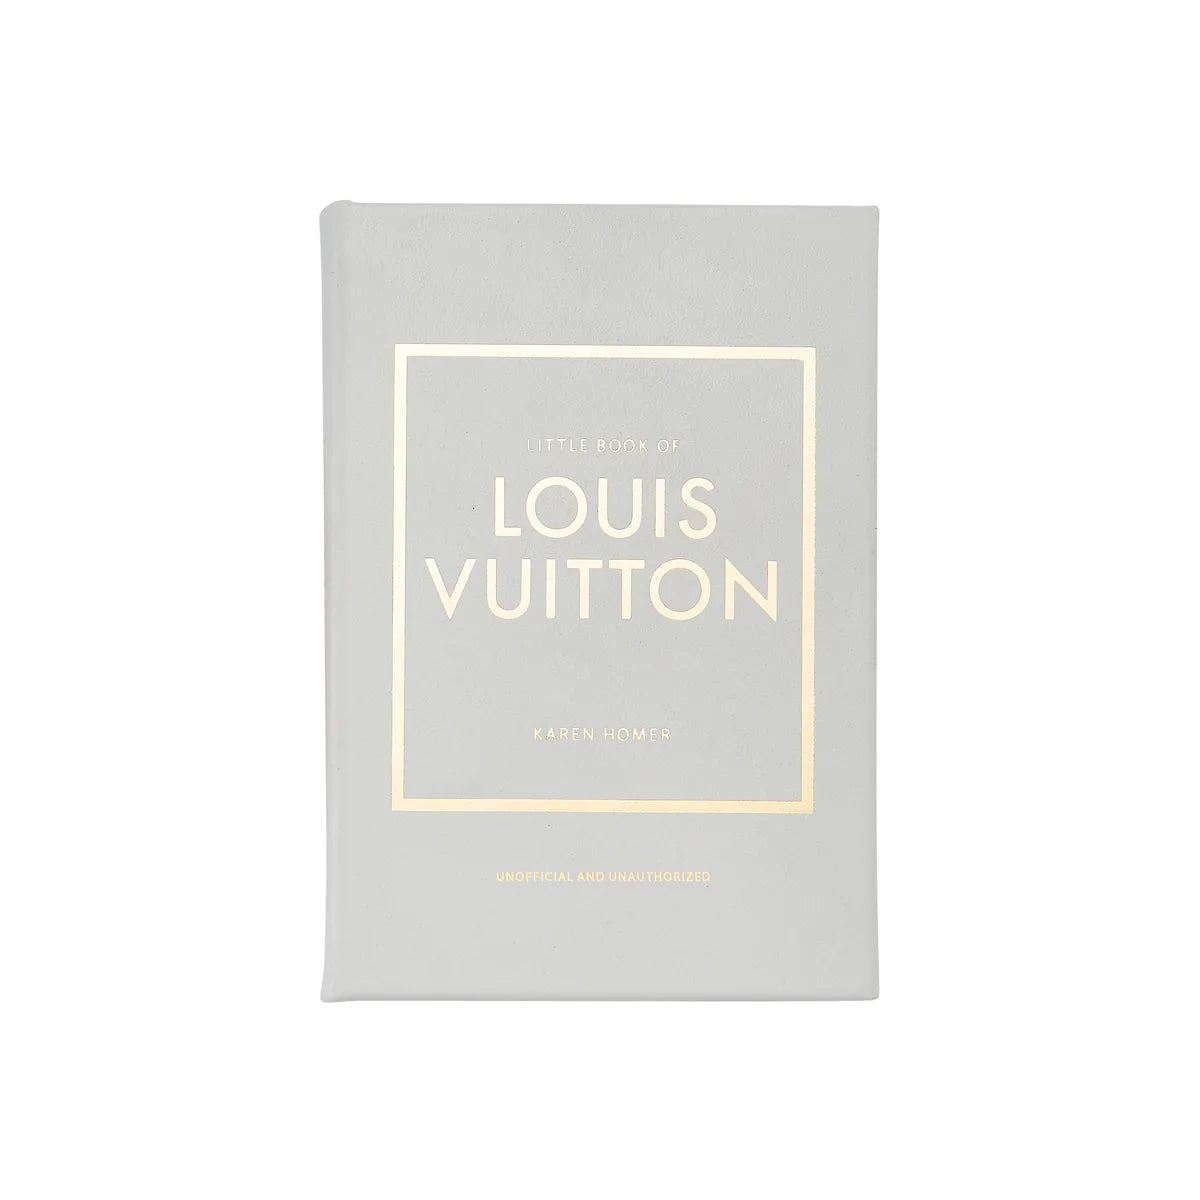 Fashion - Little Book of Louis Vuitton